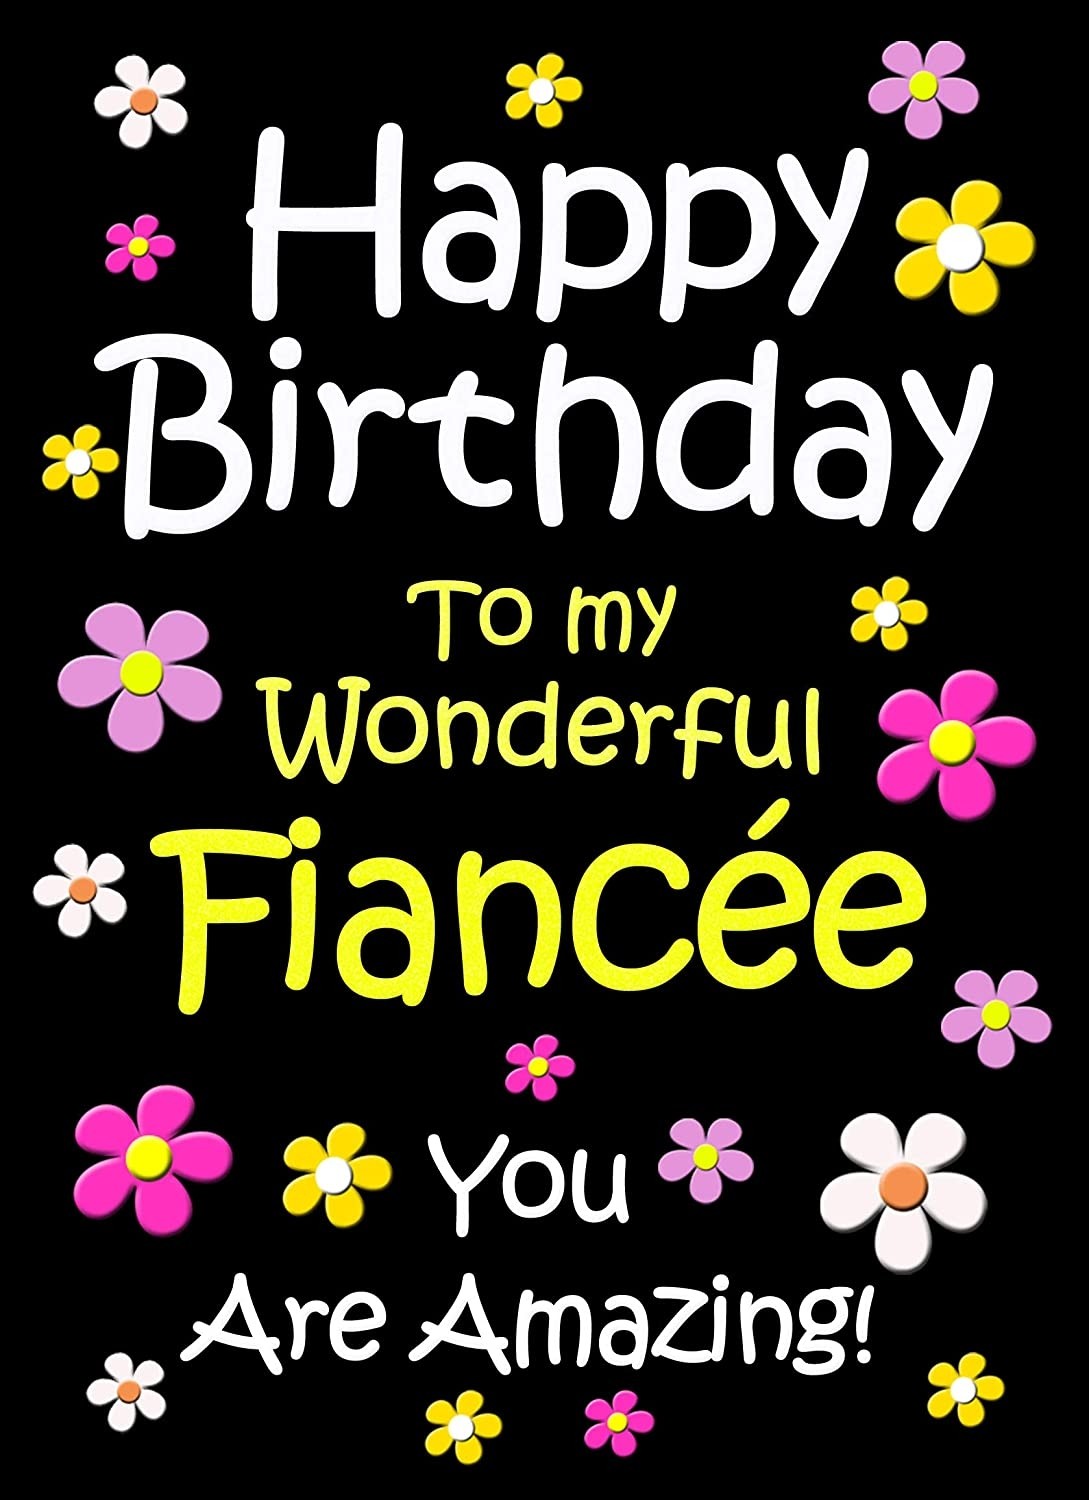 Fiancee Birthday Card (Black)